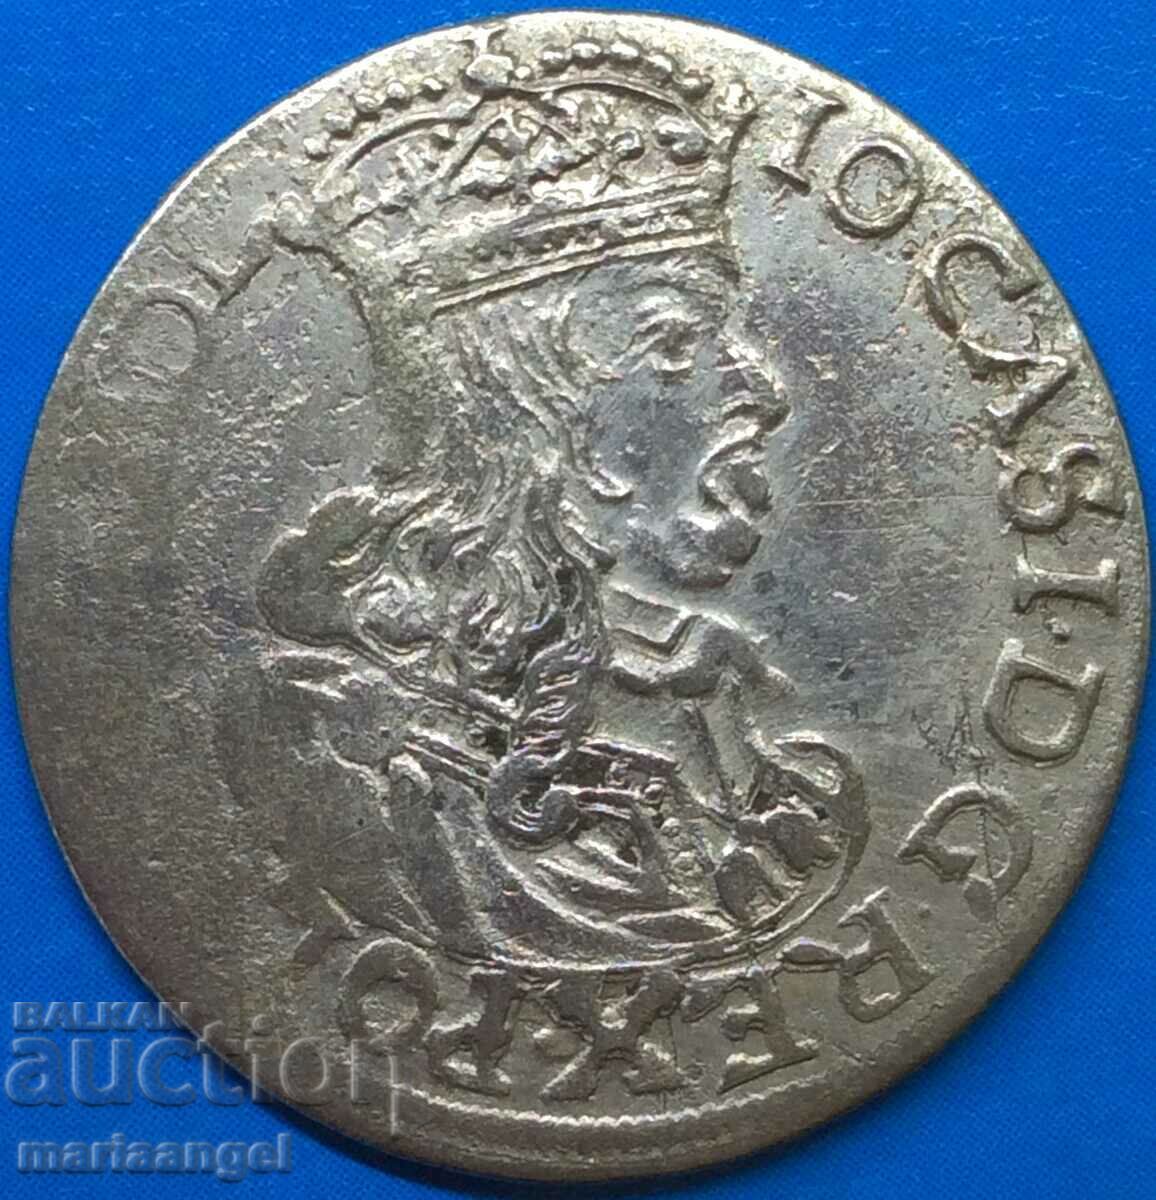 Krakow 6 Grosz 1663 Poland John II Casimir silver